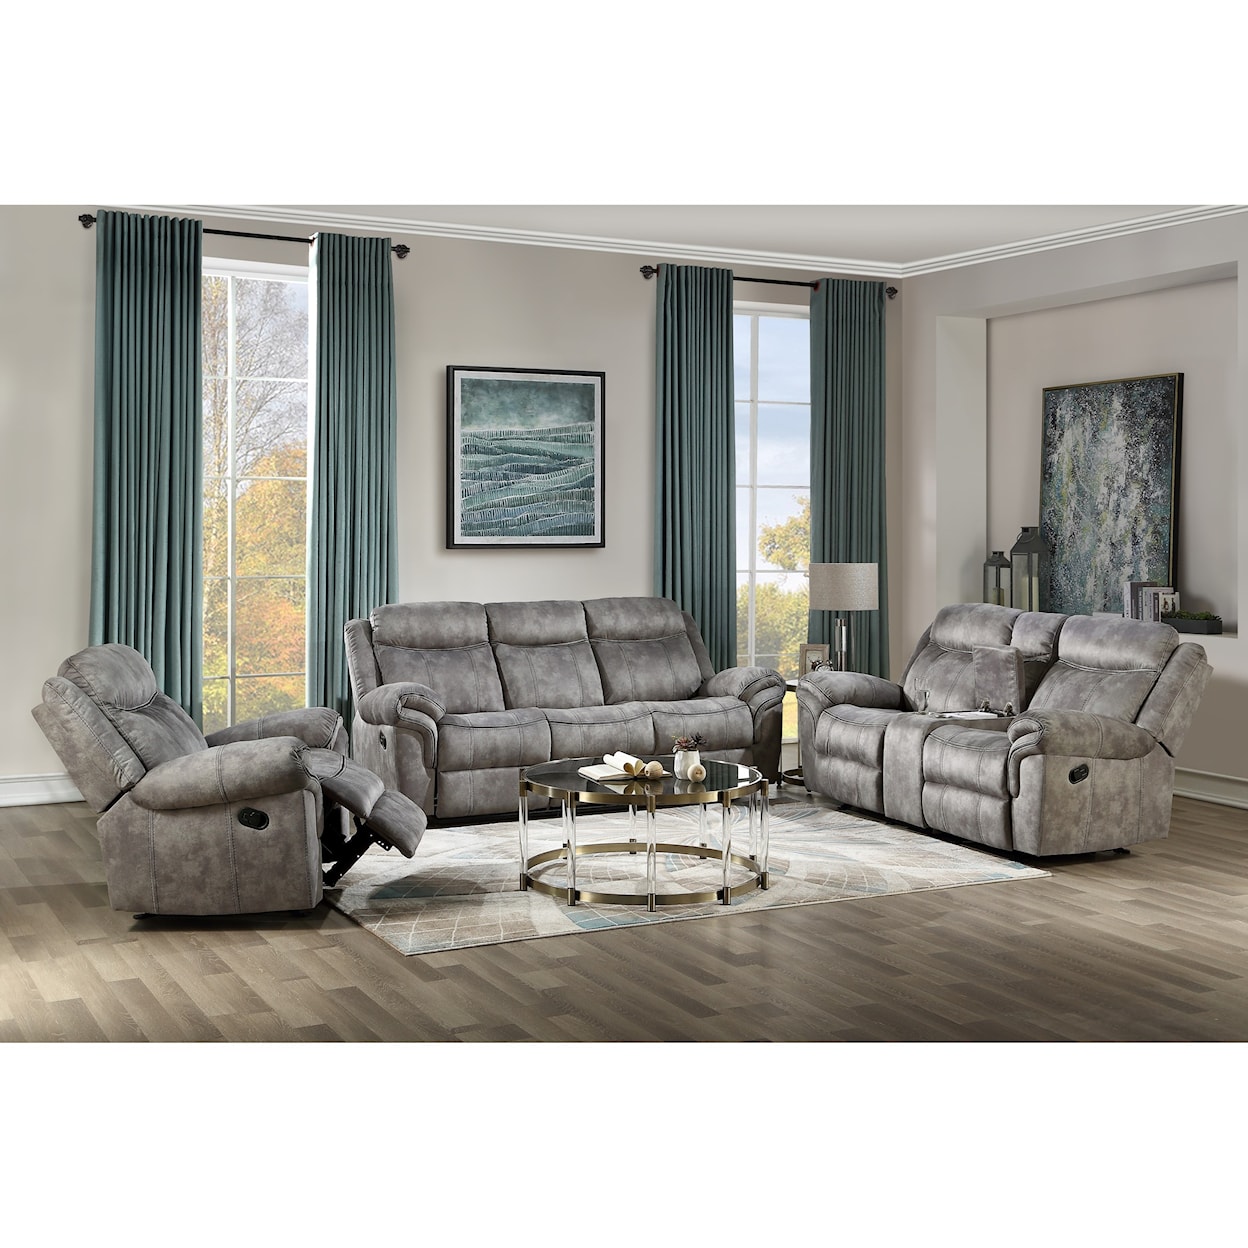 Acme Furniture Zubaida Reclining Glider Sofa